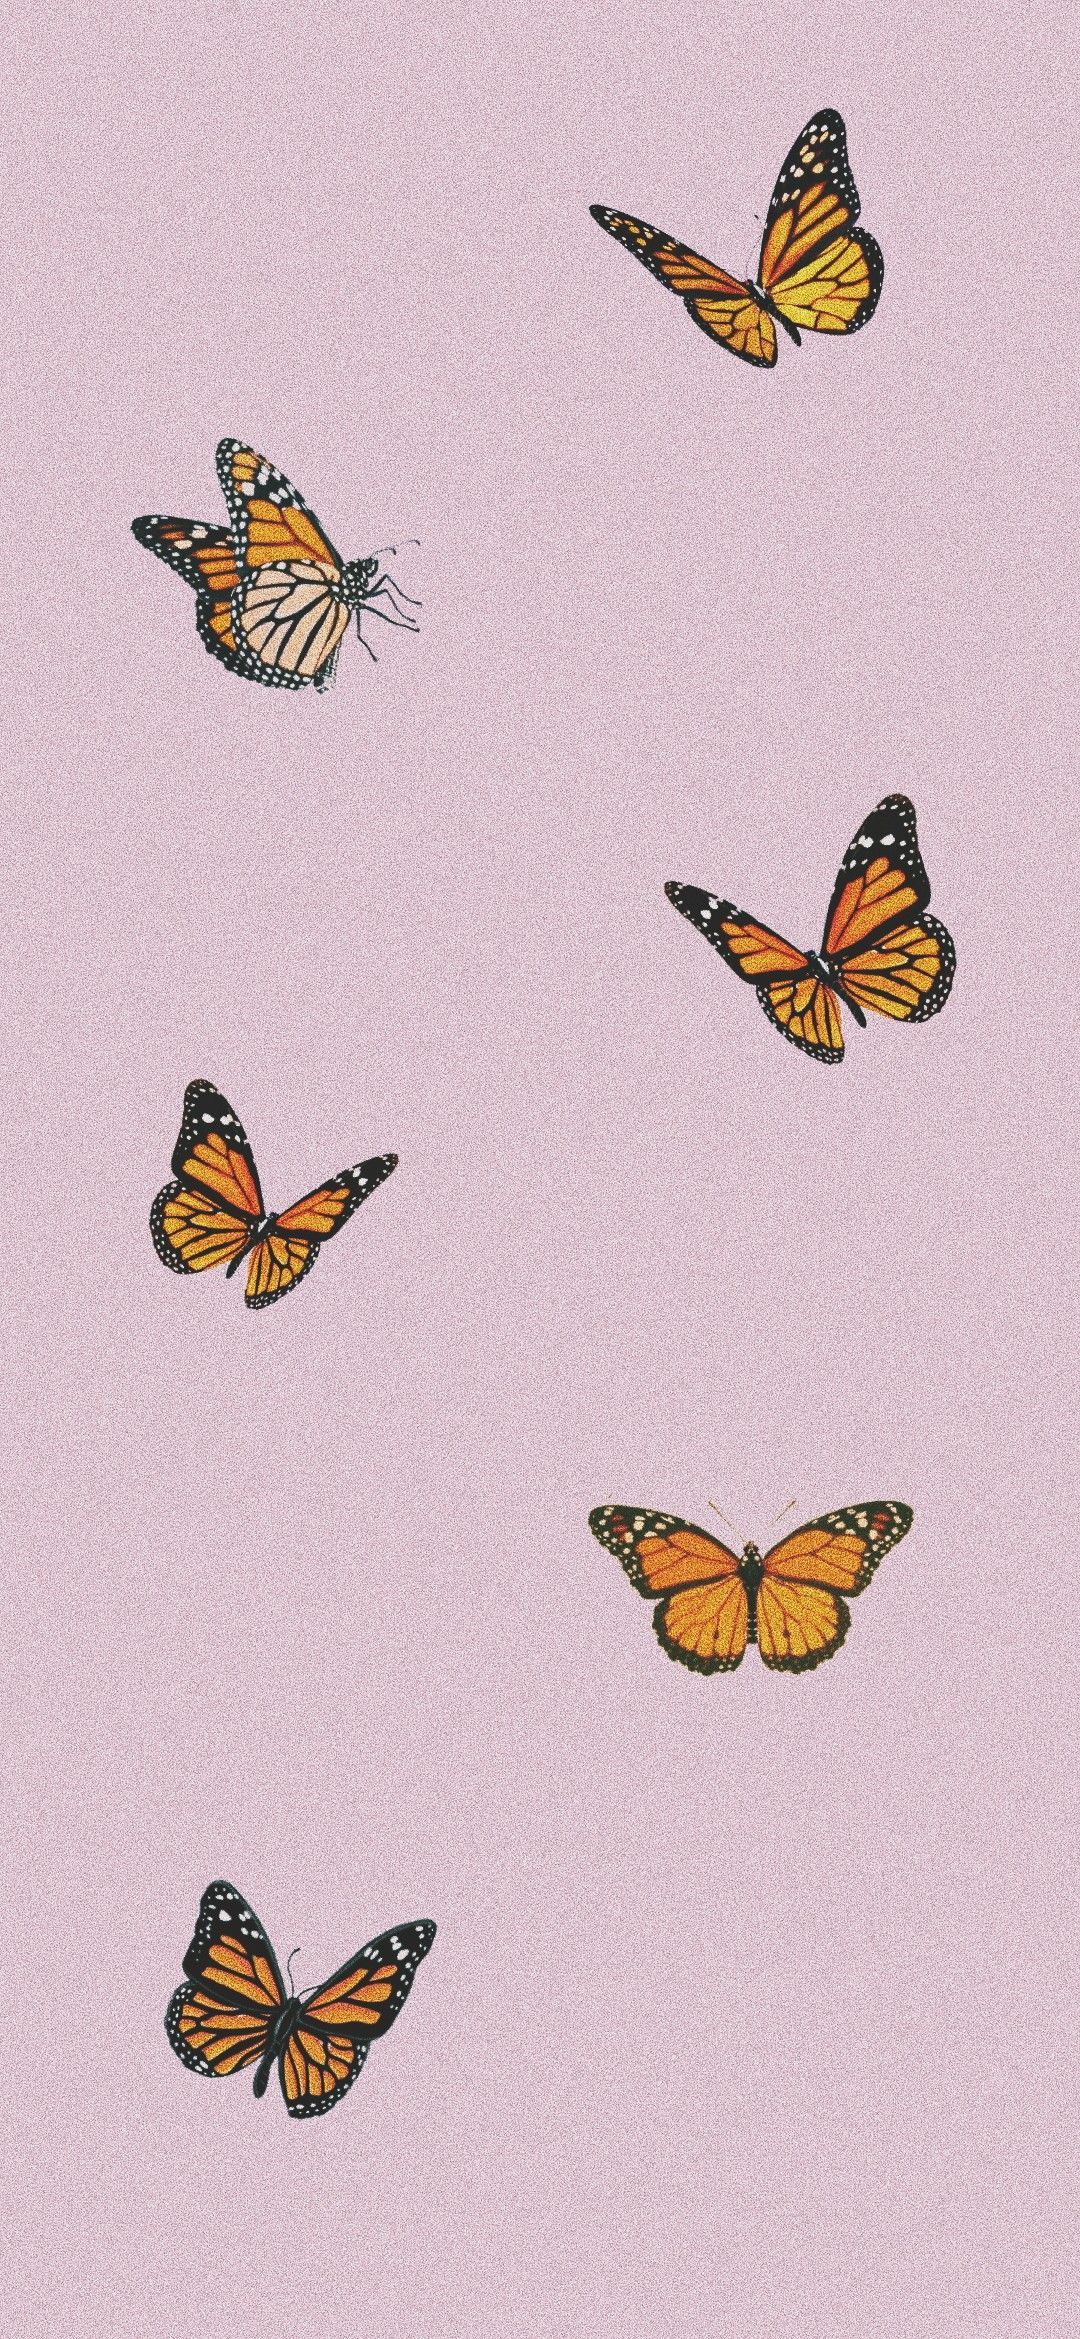 butterfly wallpaper iphone x big pink. Butterfly wallpaper iphone